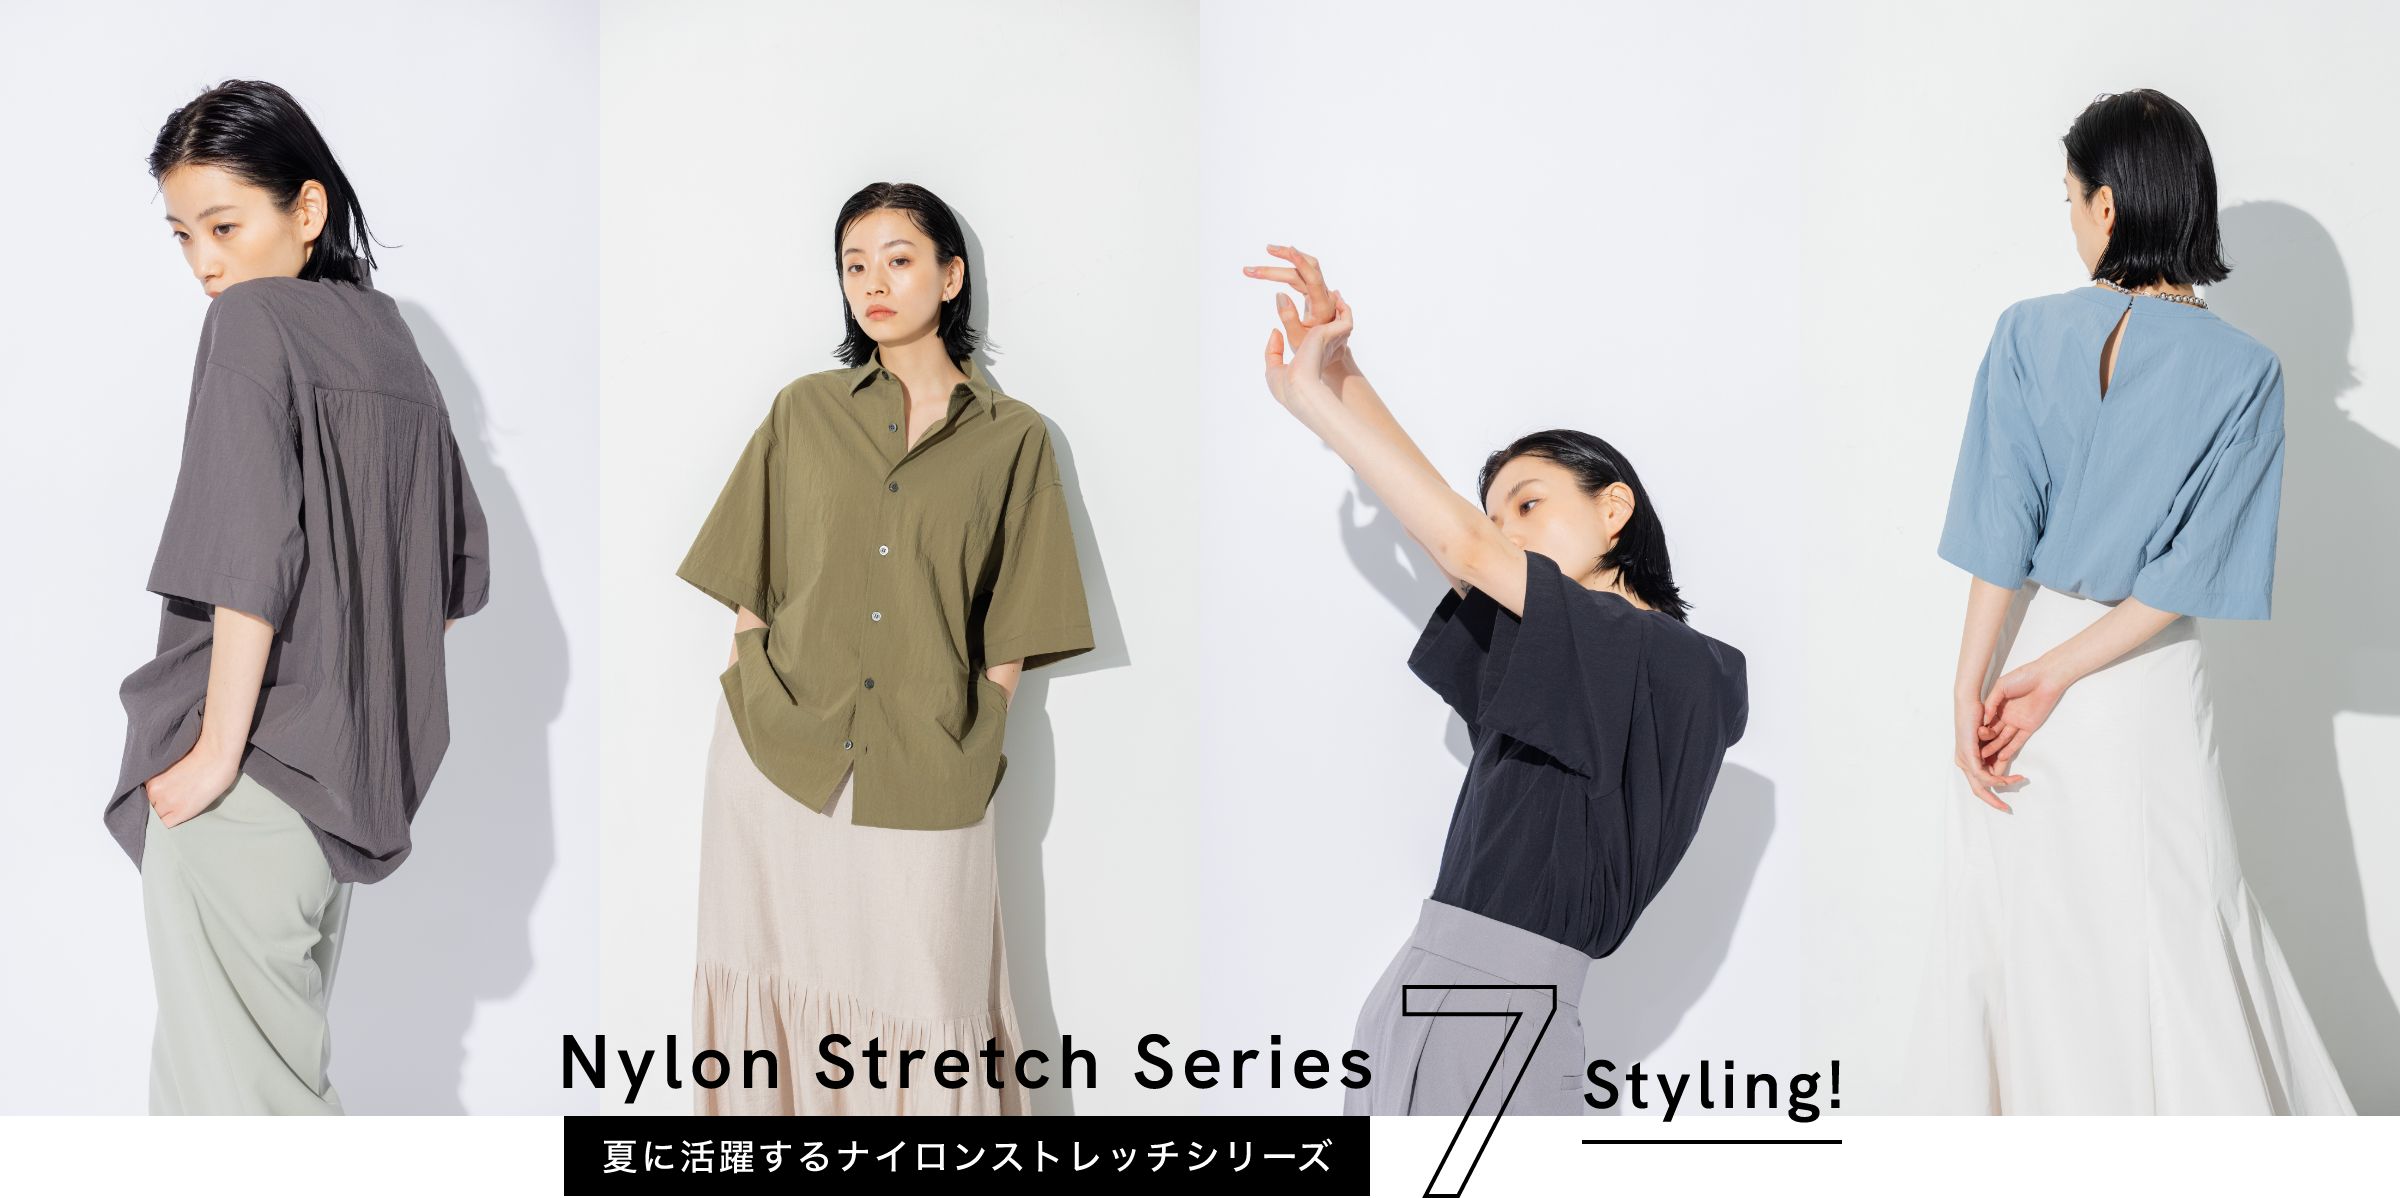 Nylon Stretch Series 7Styling! 夏に活躍するナイロンストレッチシリーズ